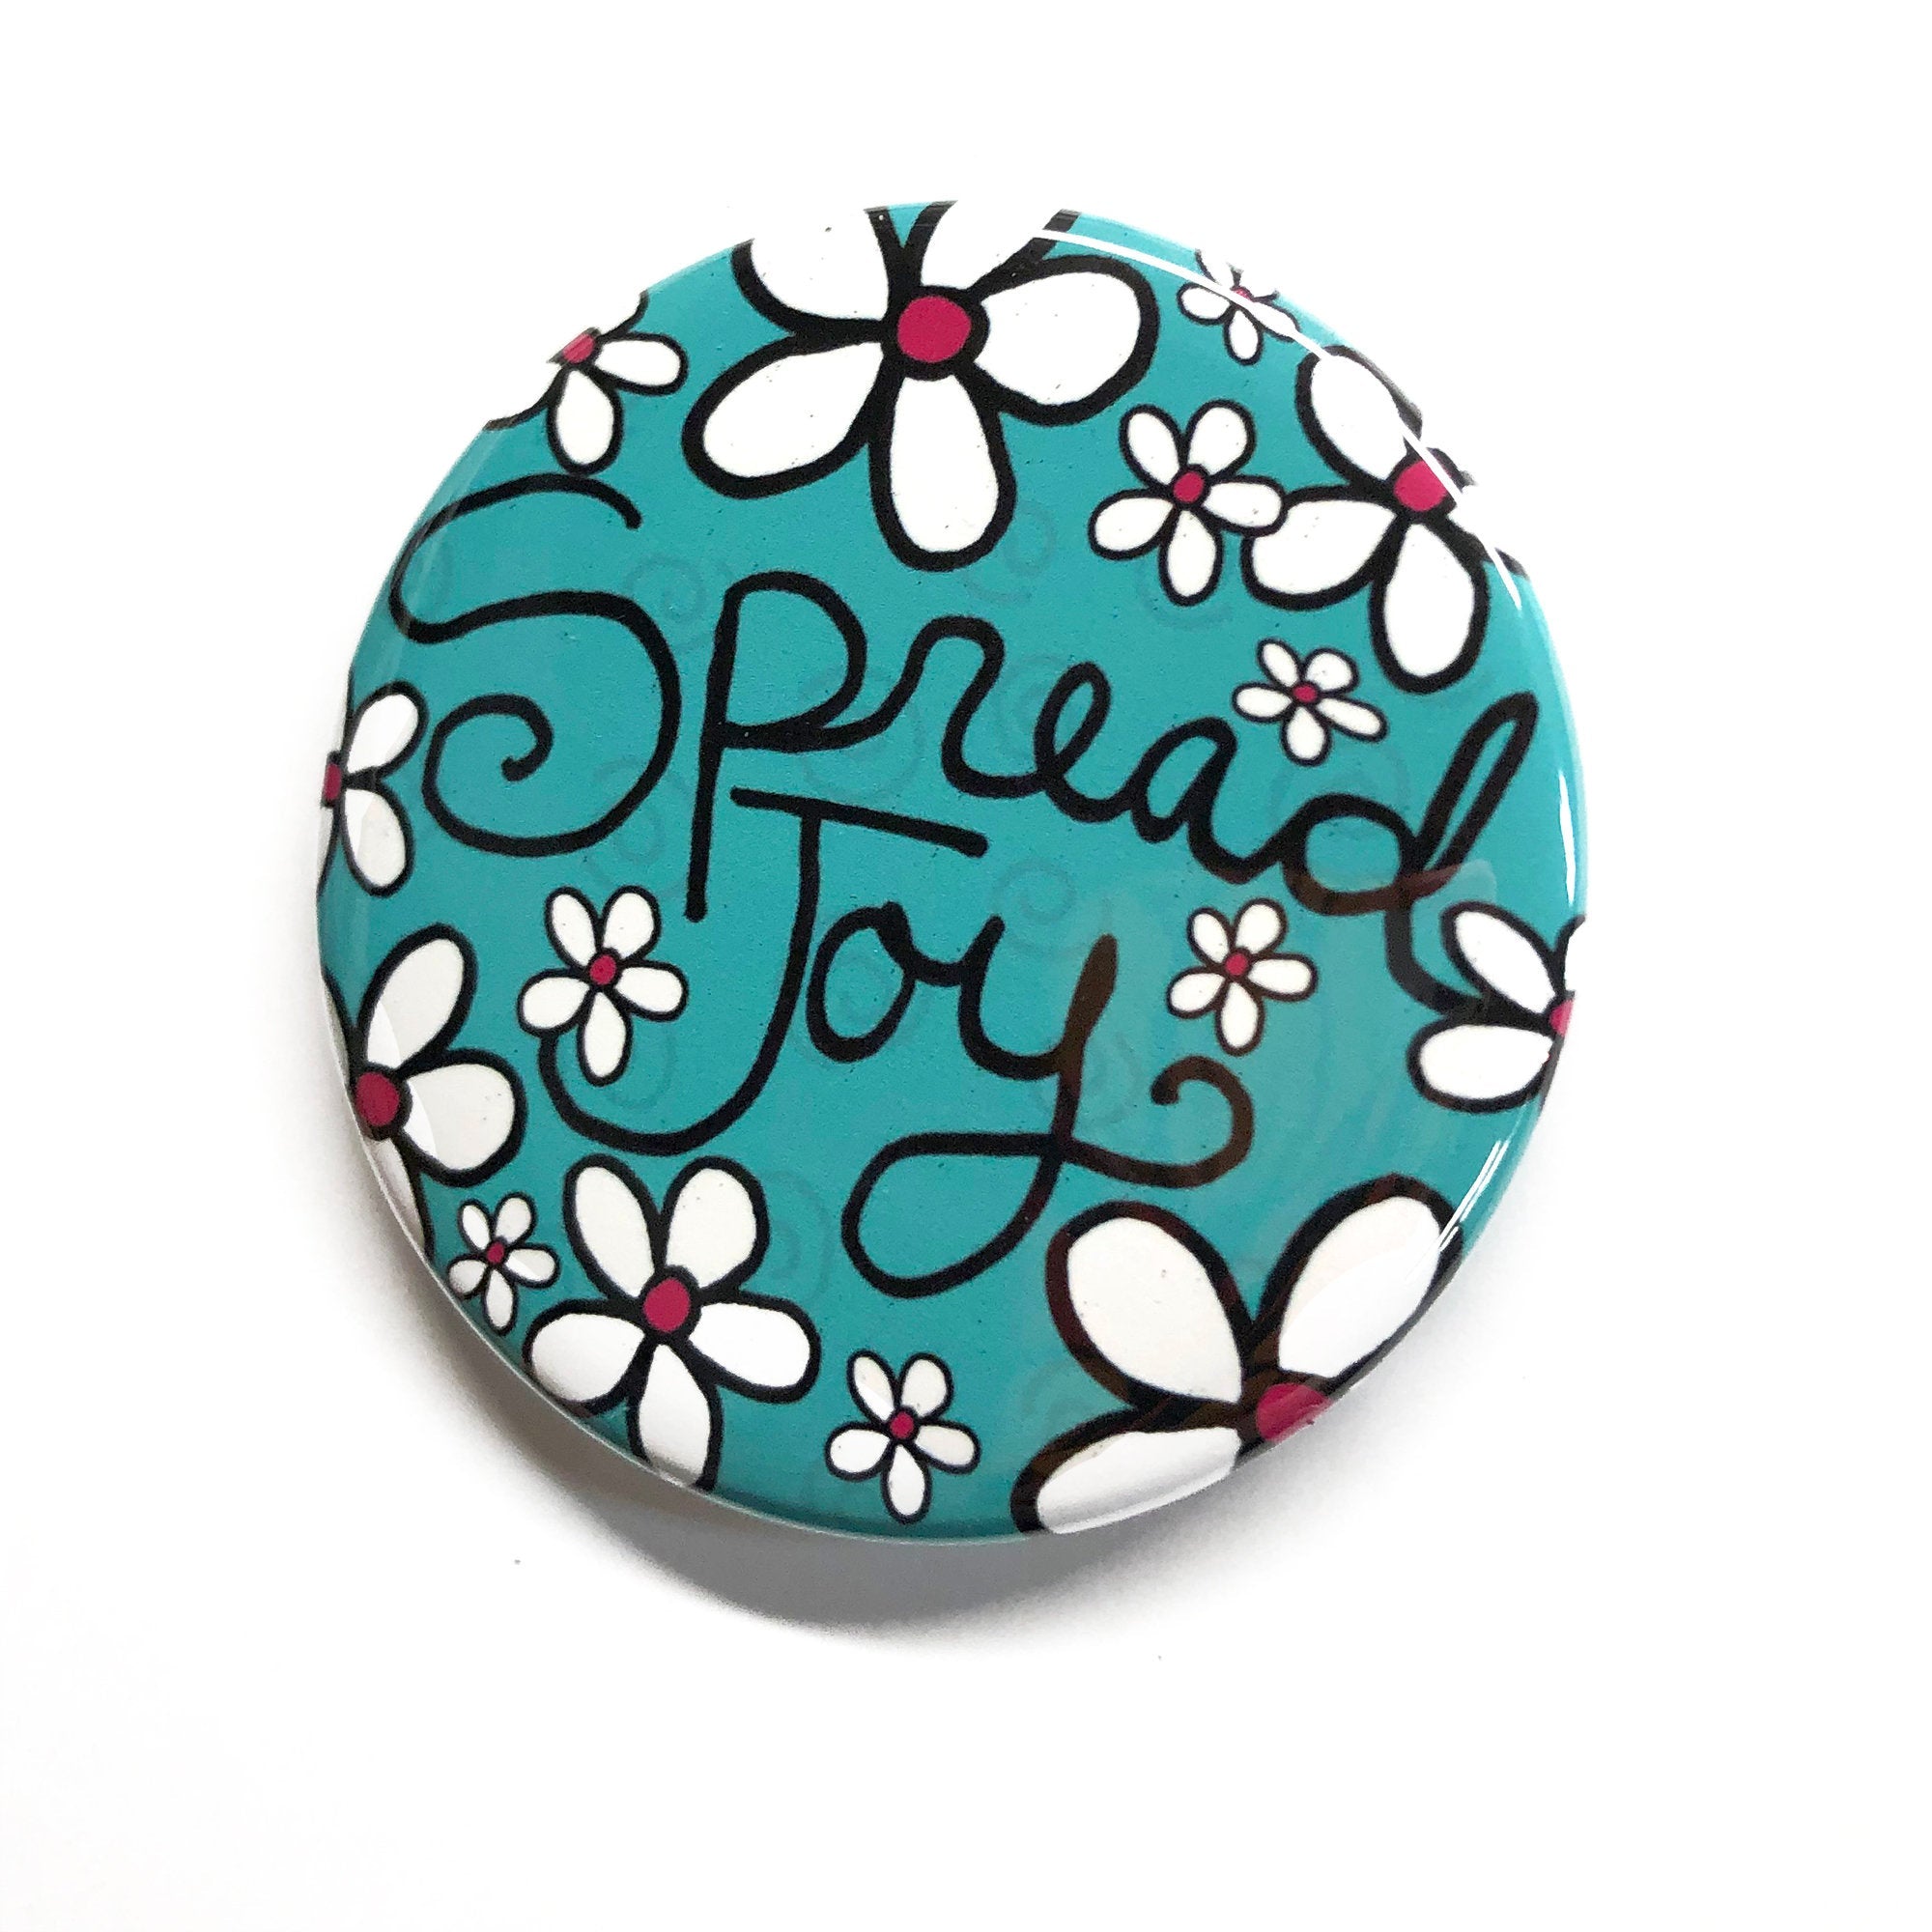 Spread Joy Magnet, Pin Back Button or Pocket Mirror